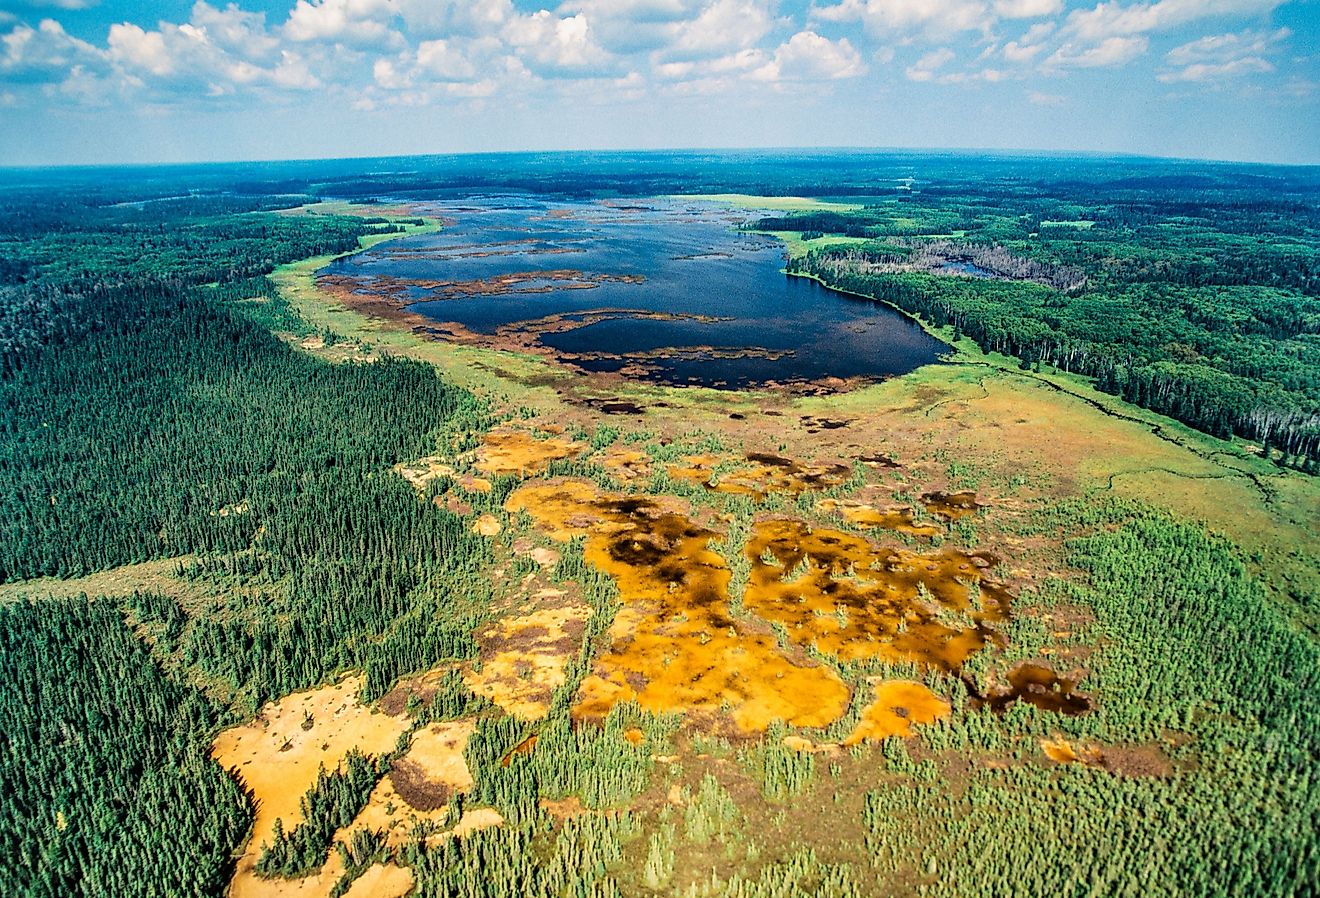 Aerial view of Manitoba landscape. Image credit Russ Heinl via Shutterstock.